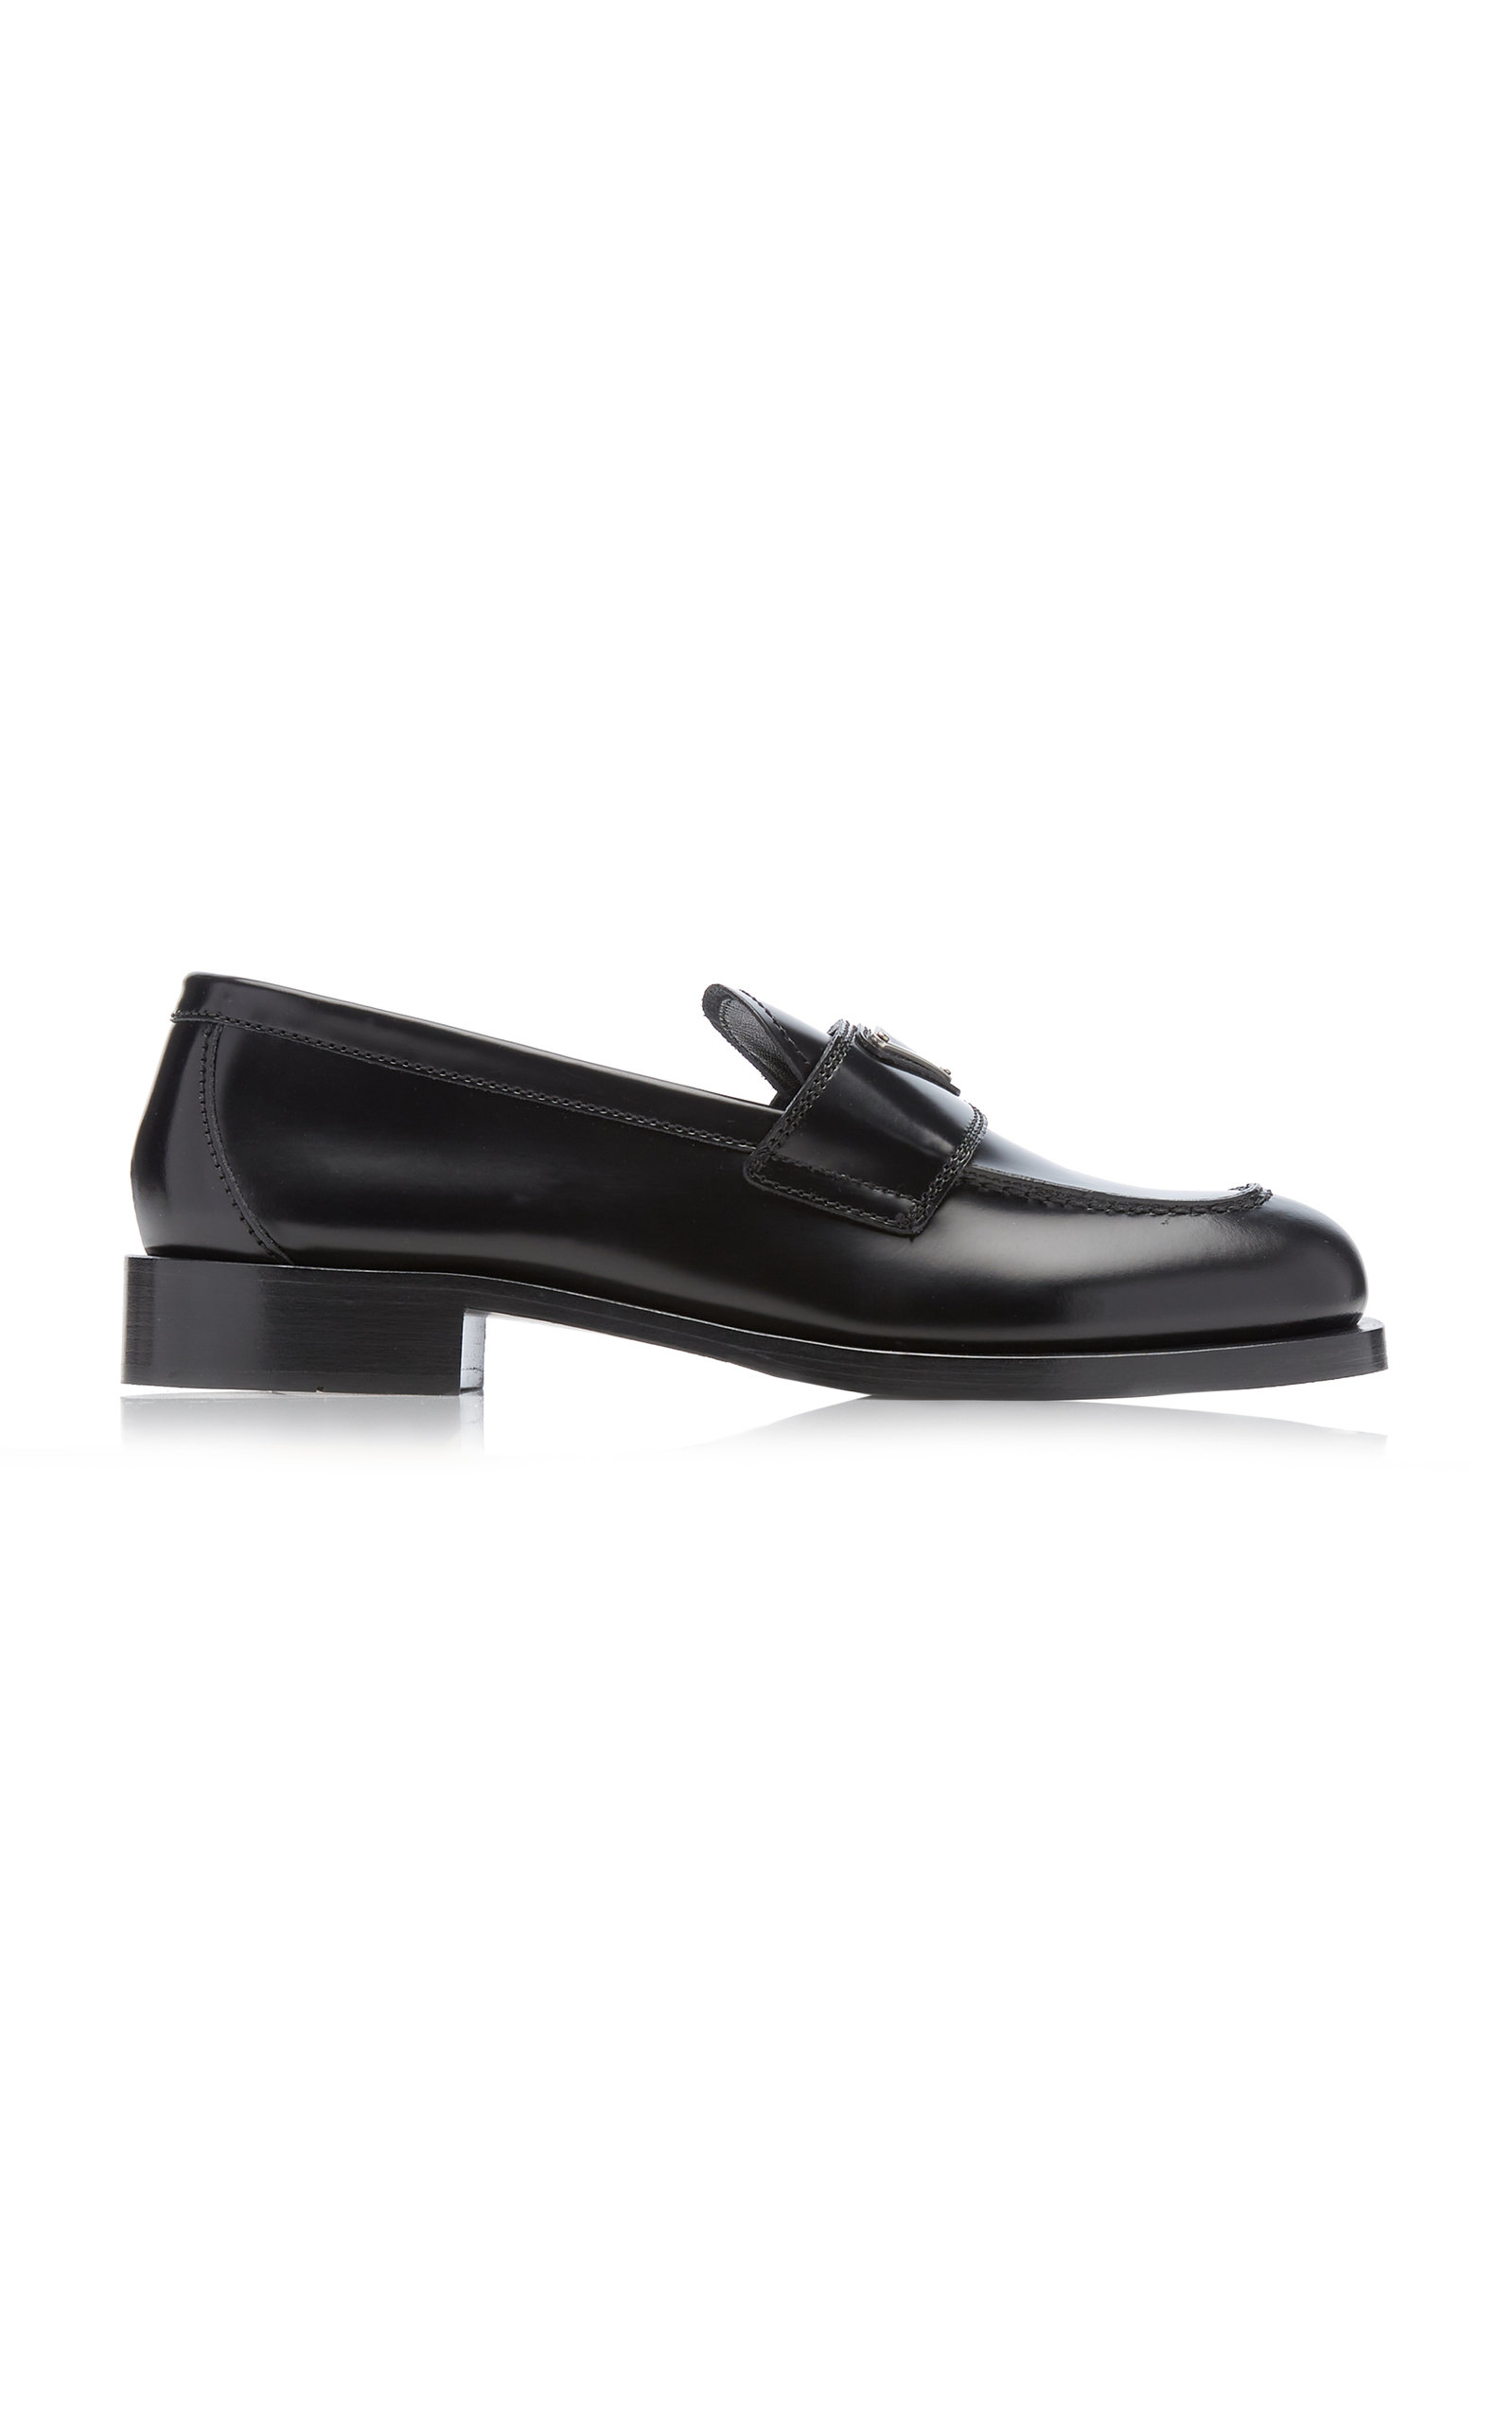 Prada - Women's Leather Loafers - Black - IT 35 - Moda Operandi